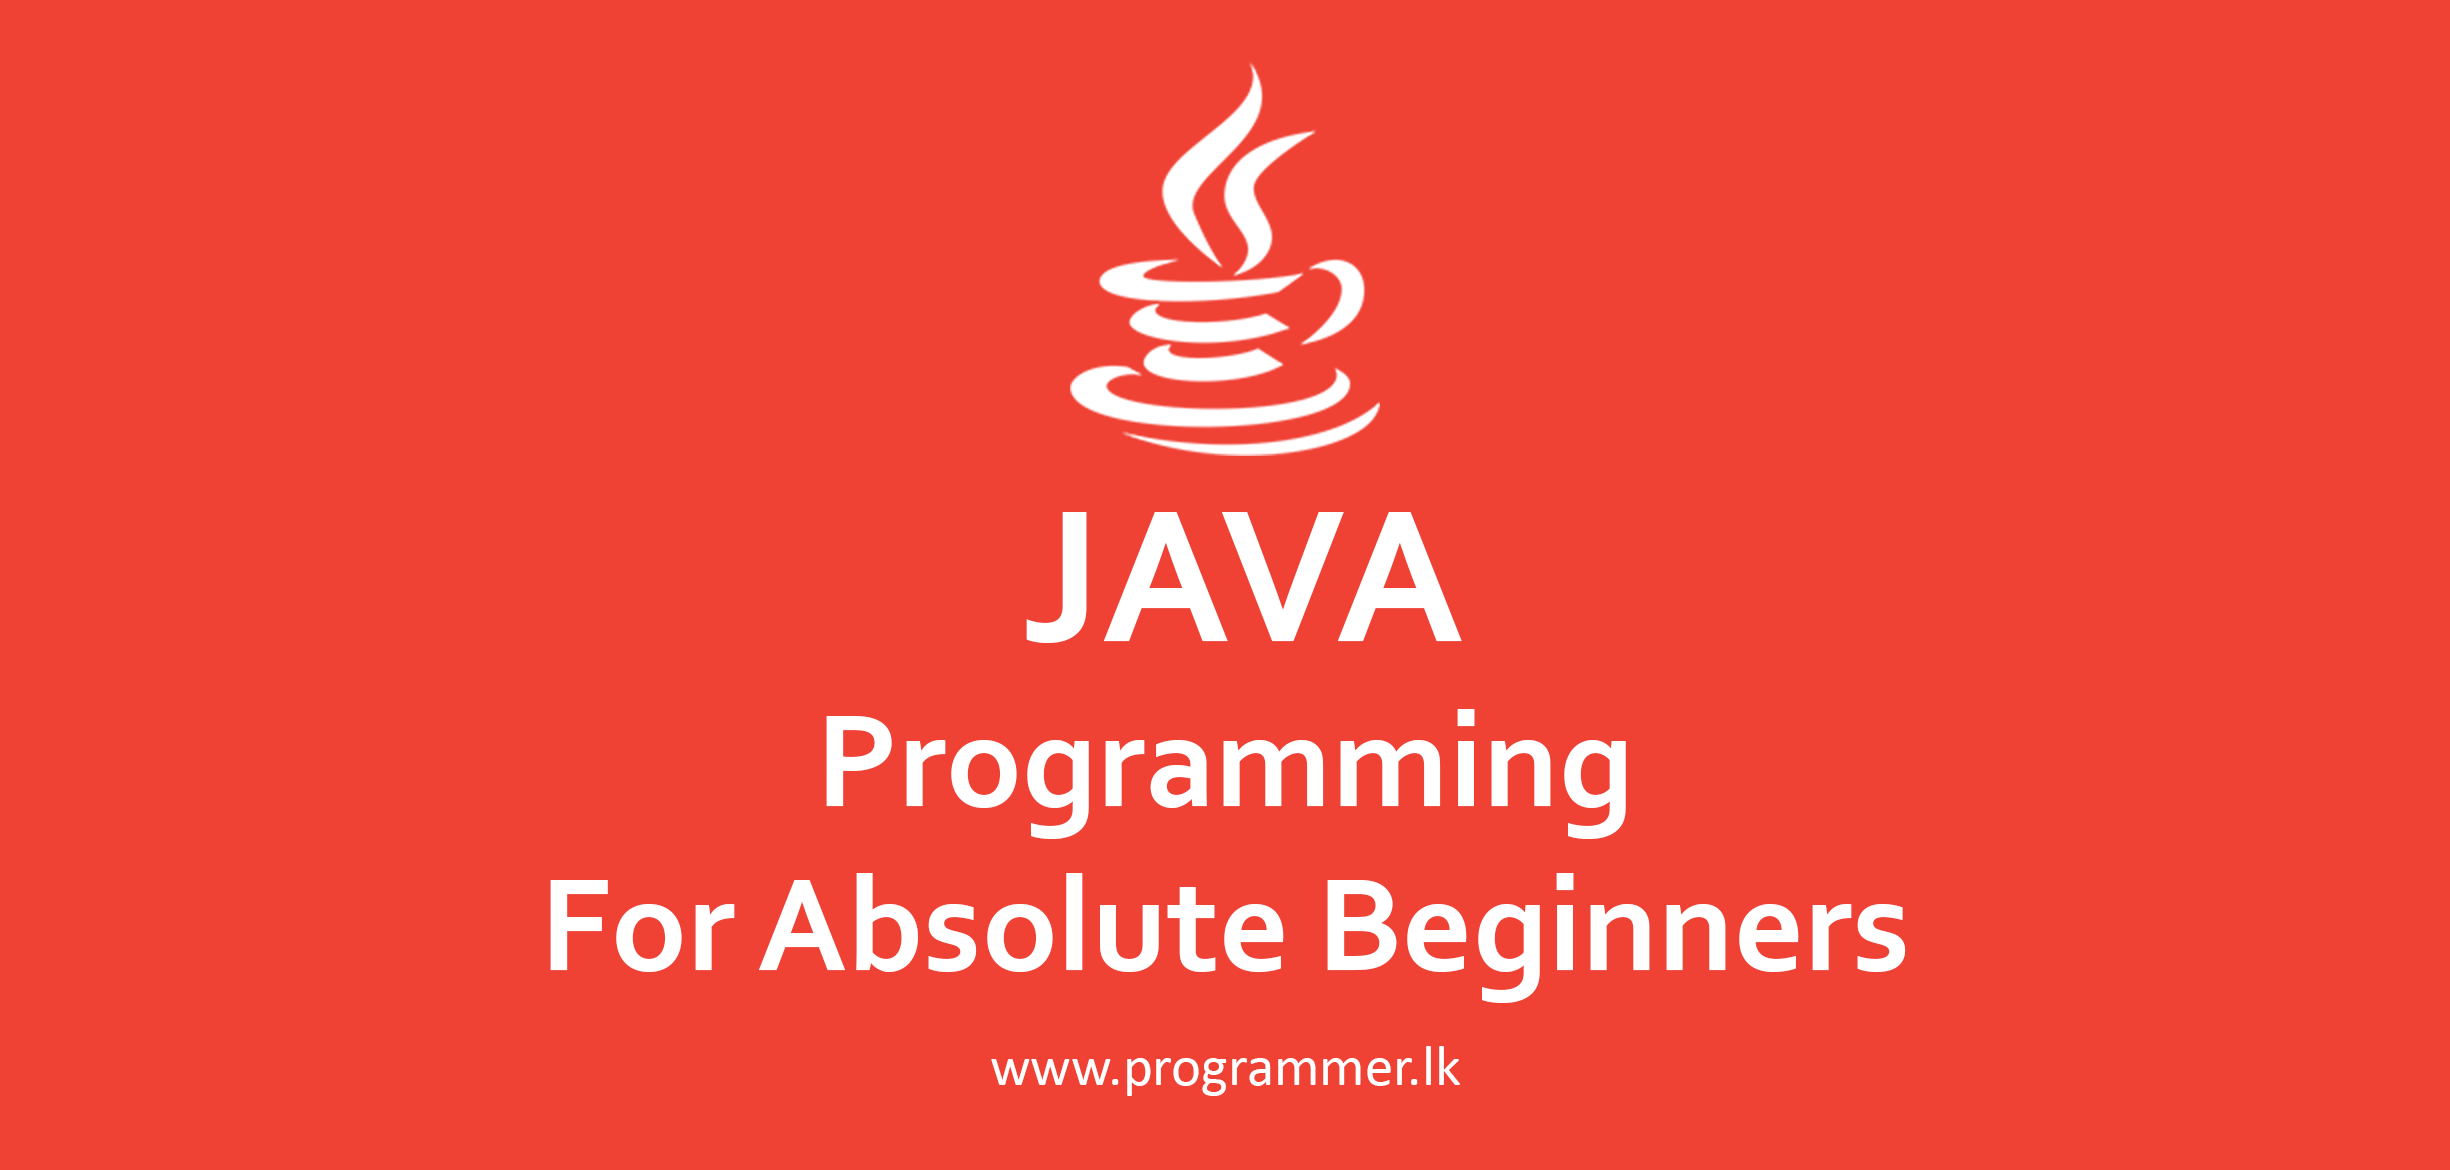 JAVA Programming For Absolute Beginners | programmer.lk